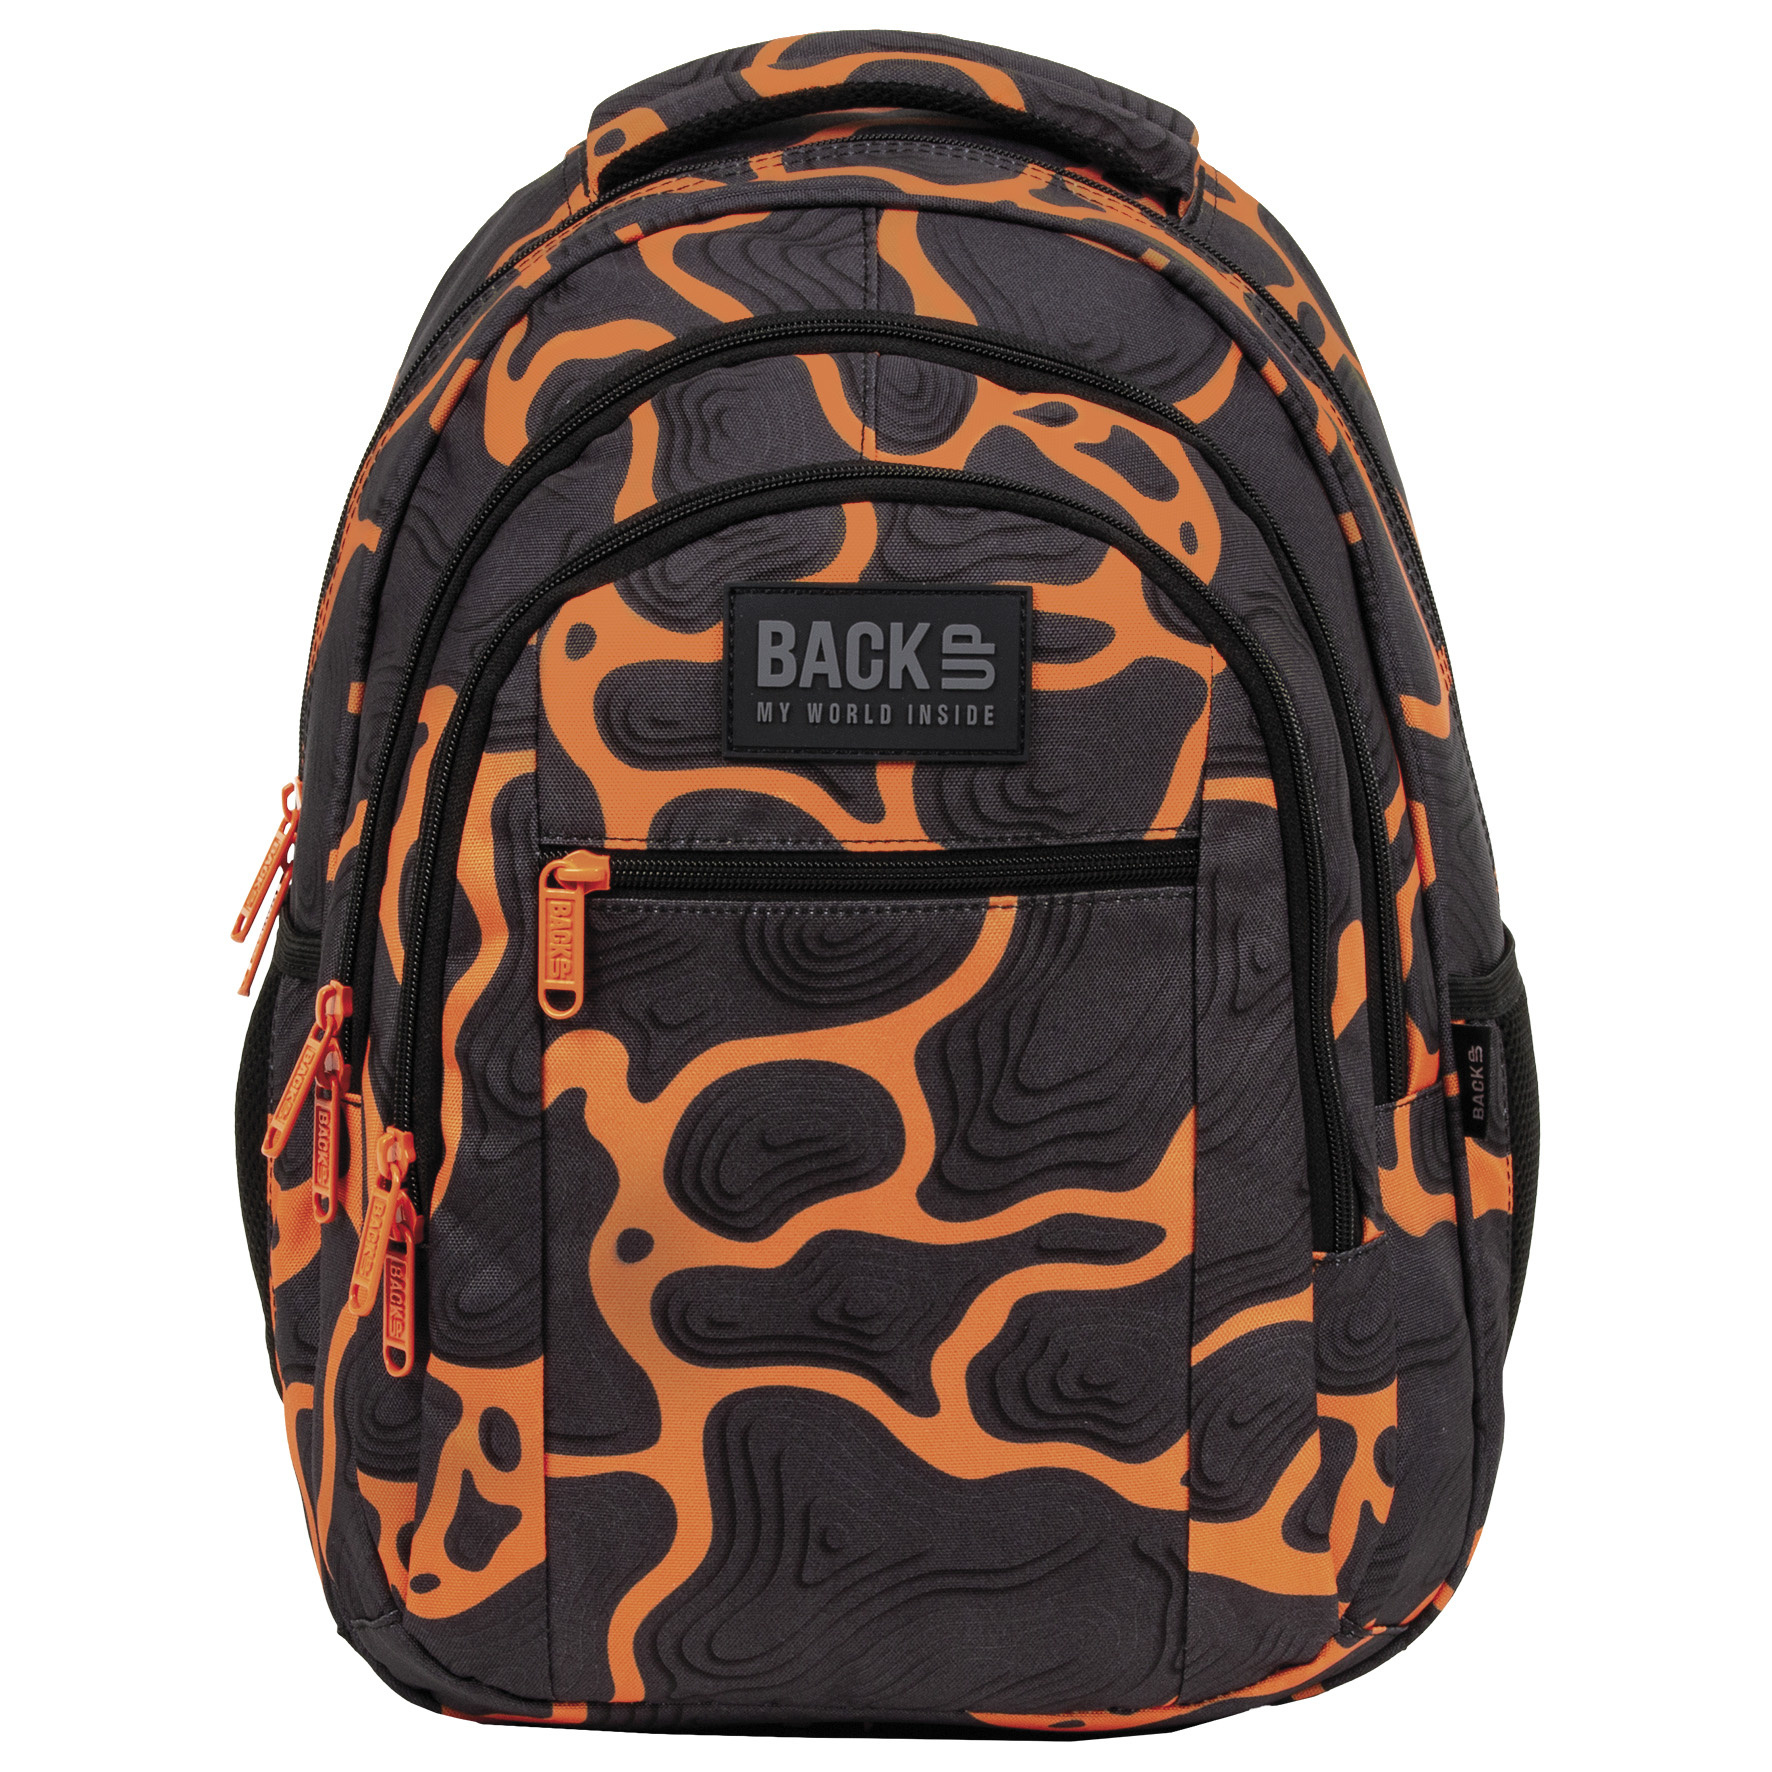 BackUP Backpack, Lava - 42 x 30 x 15 cm - Polyester